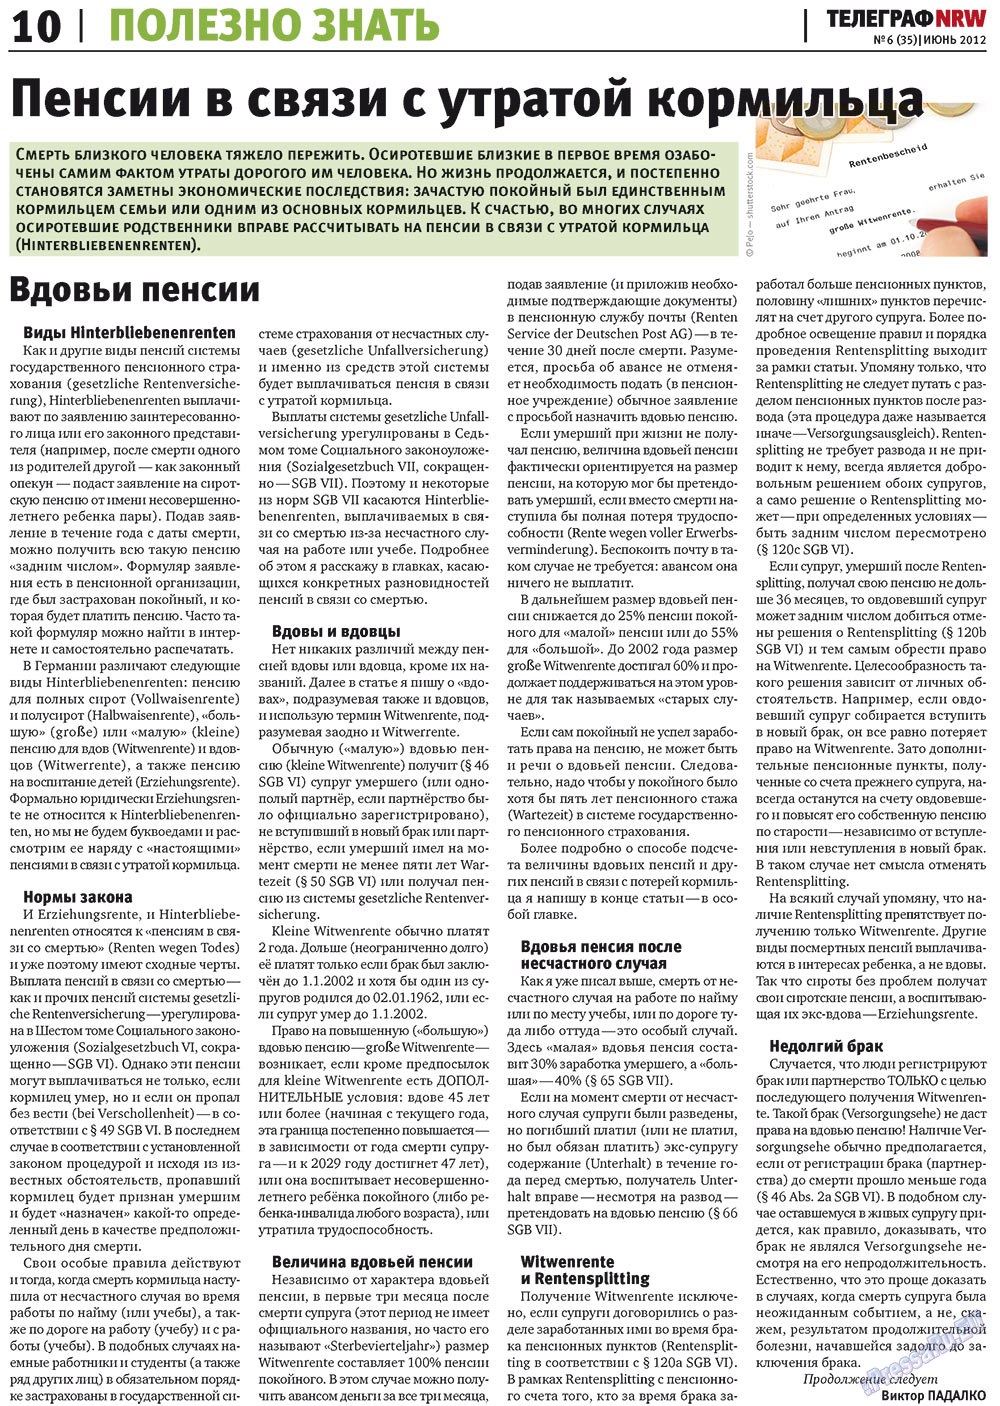 Телеграф NRW, газета. 2012 №6 стр.10